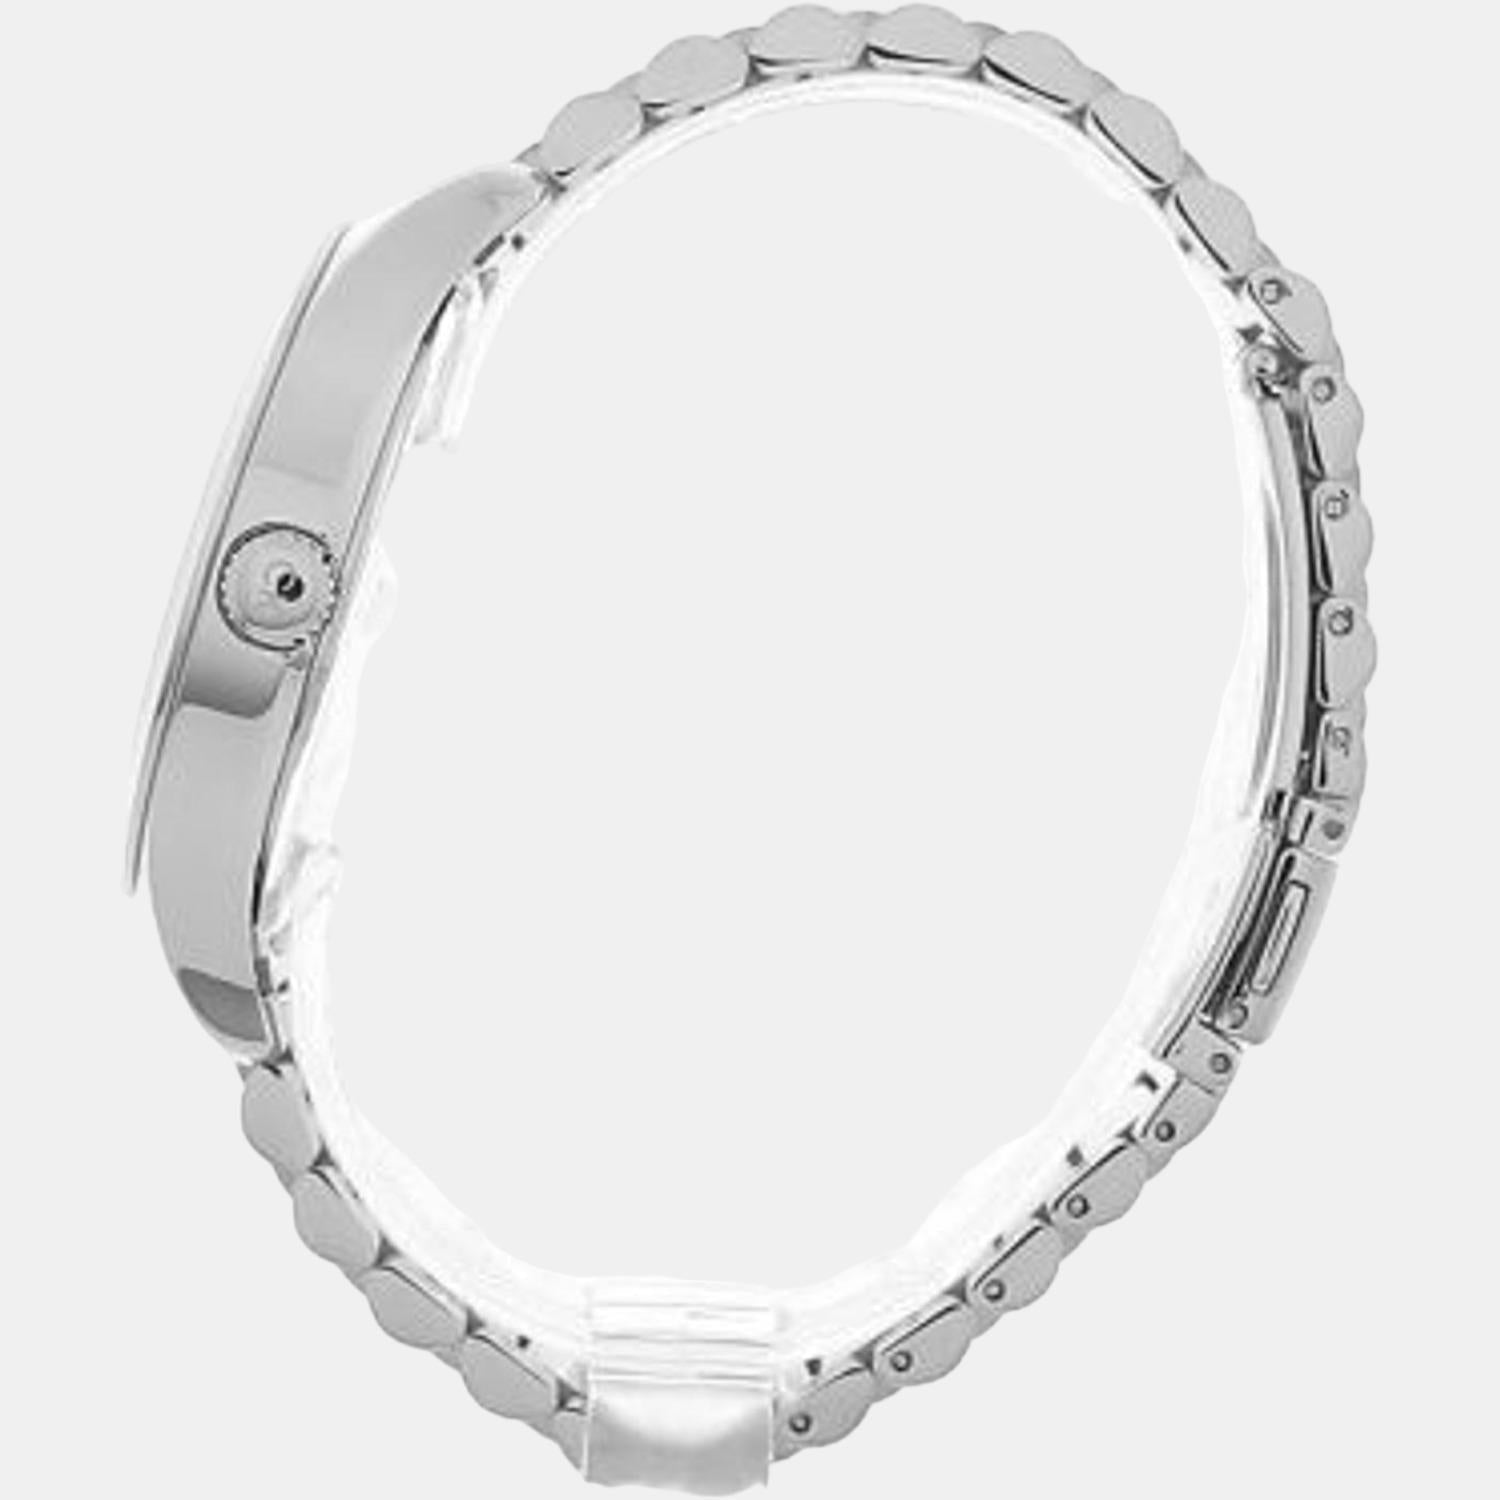 ck-stainless-steel-black-analog-unisex-adult-watch-25200163